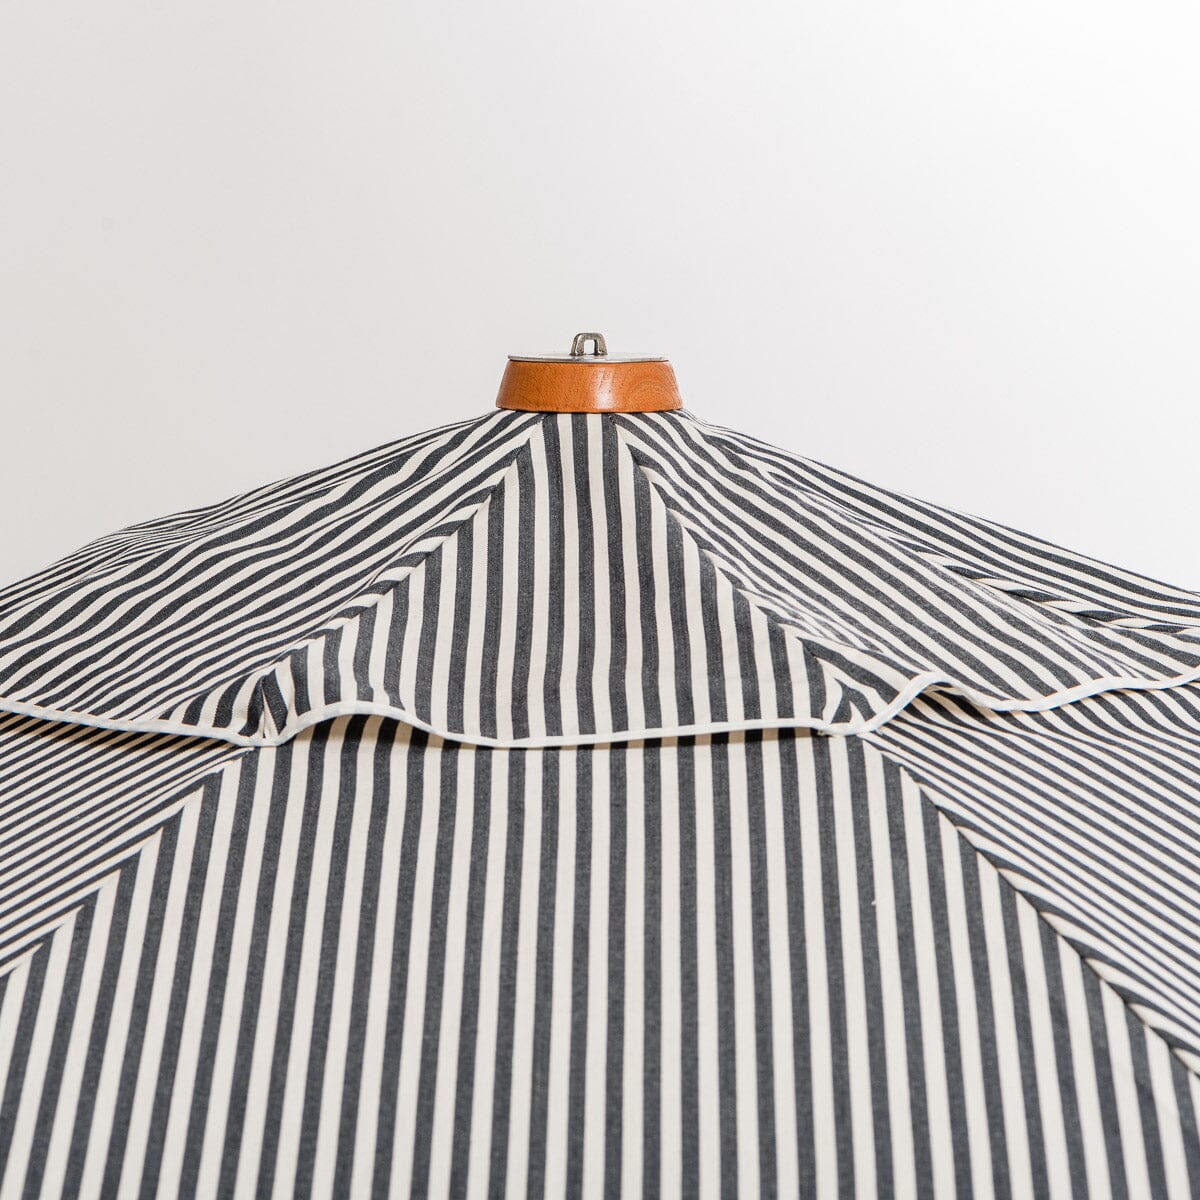 The Market Umbrella - Lauren's Navy Stripe Market Umbrella Business & Pleasure Co 